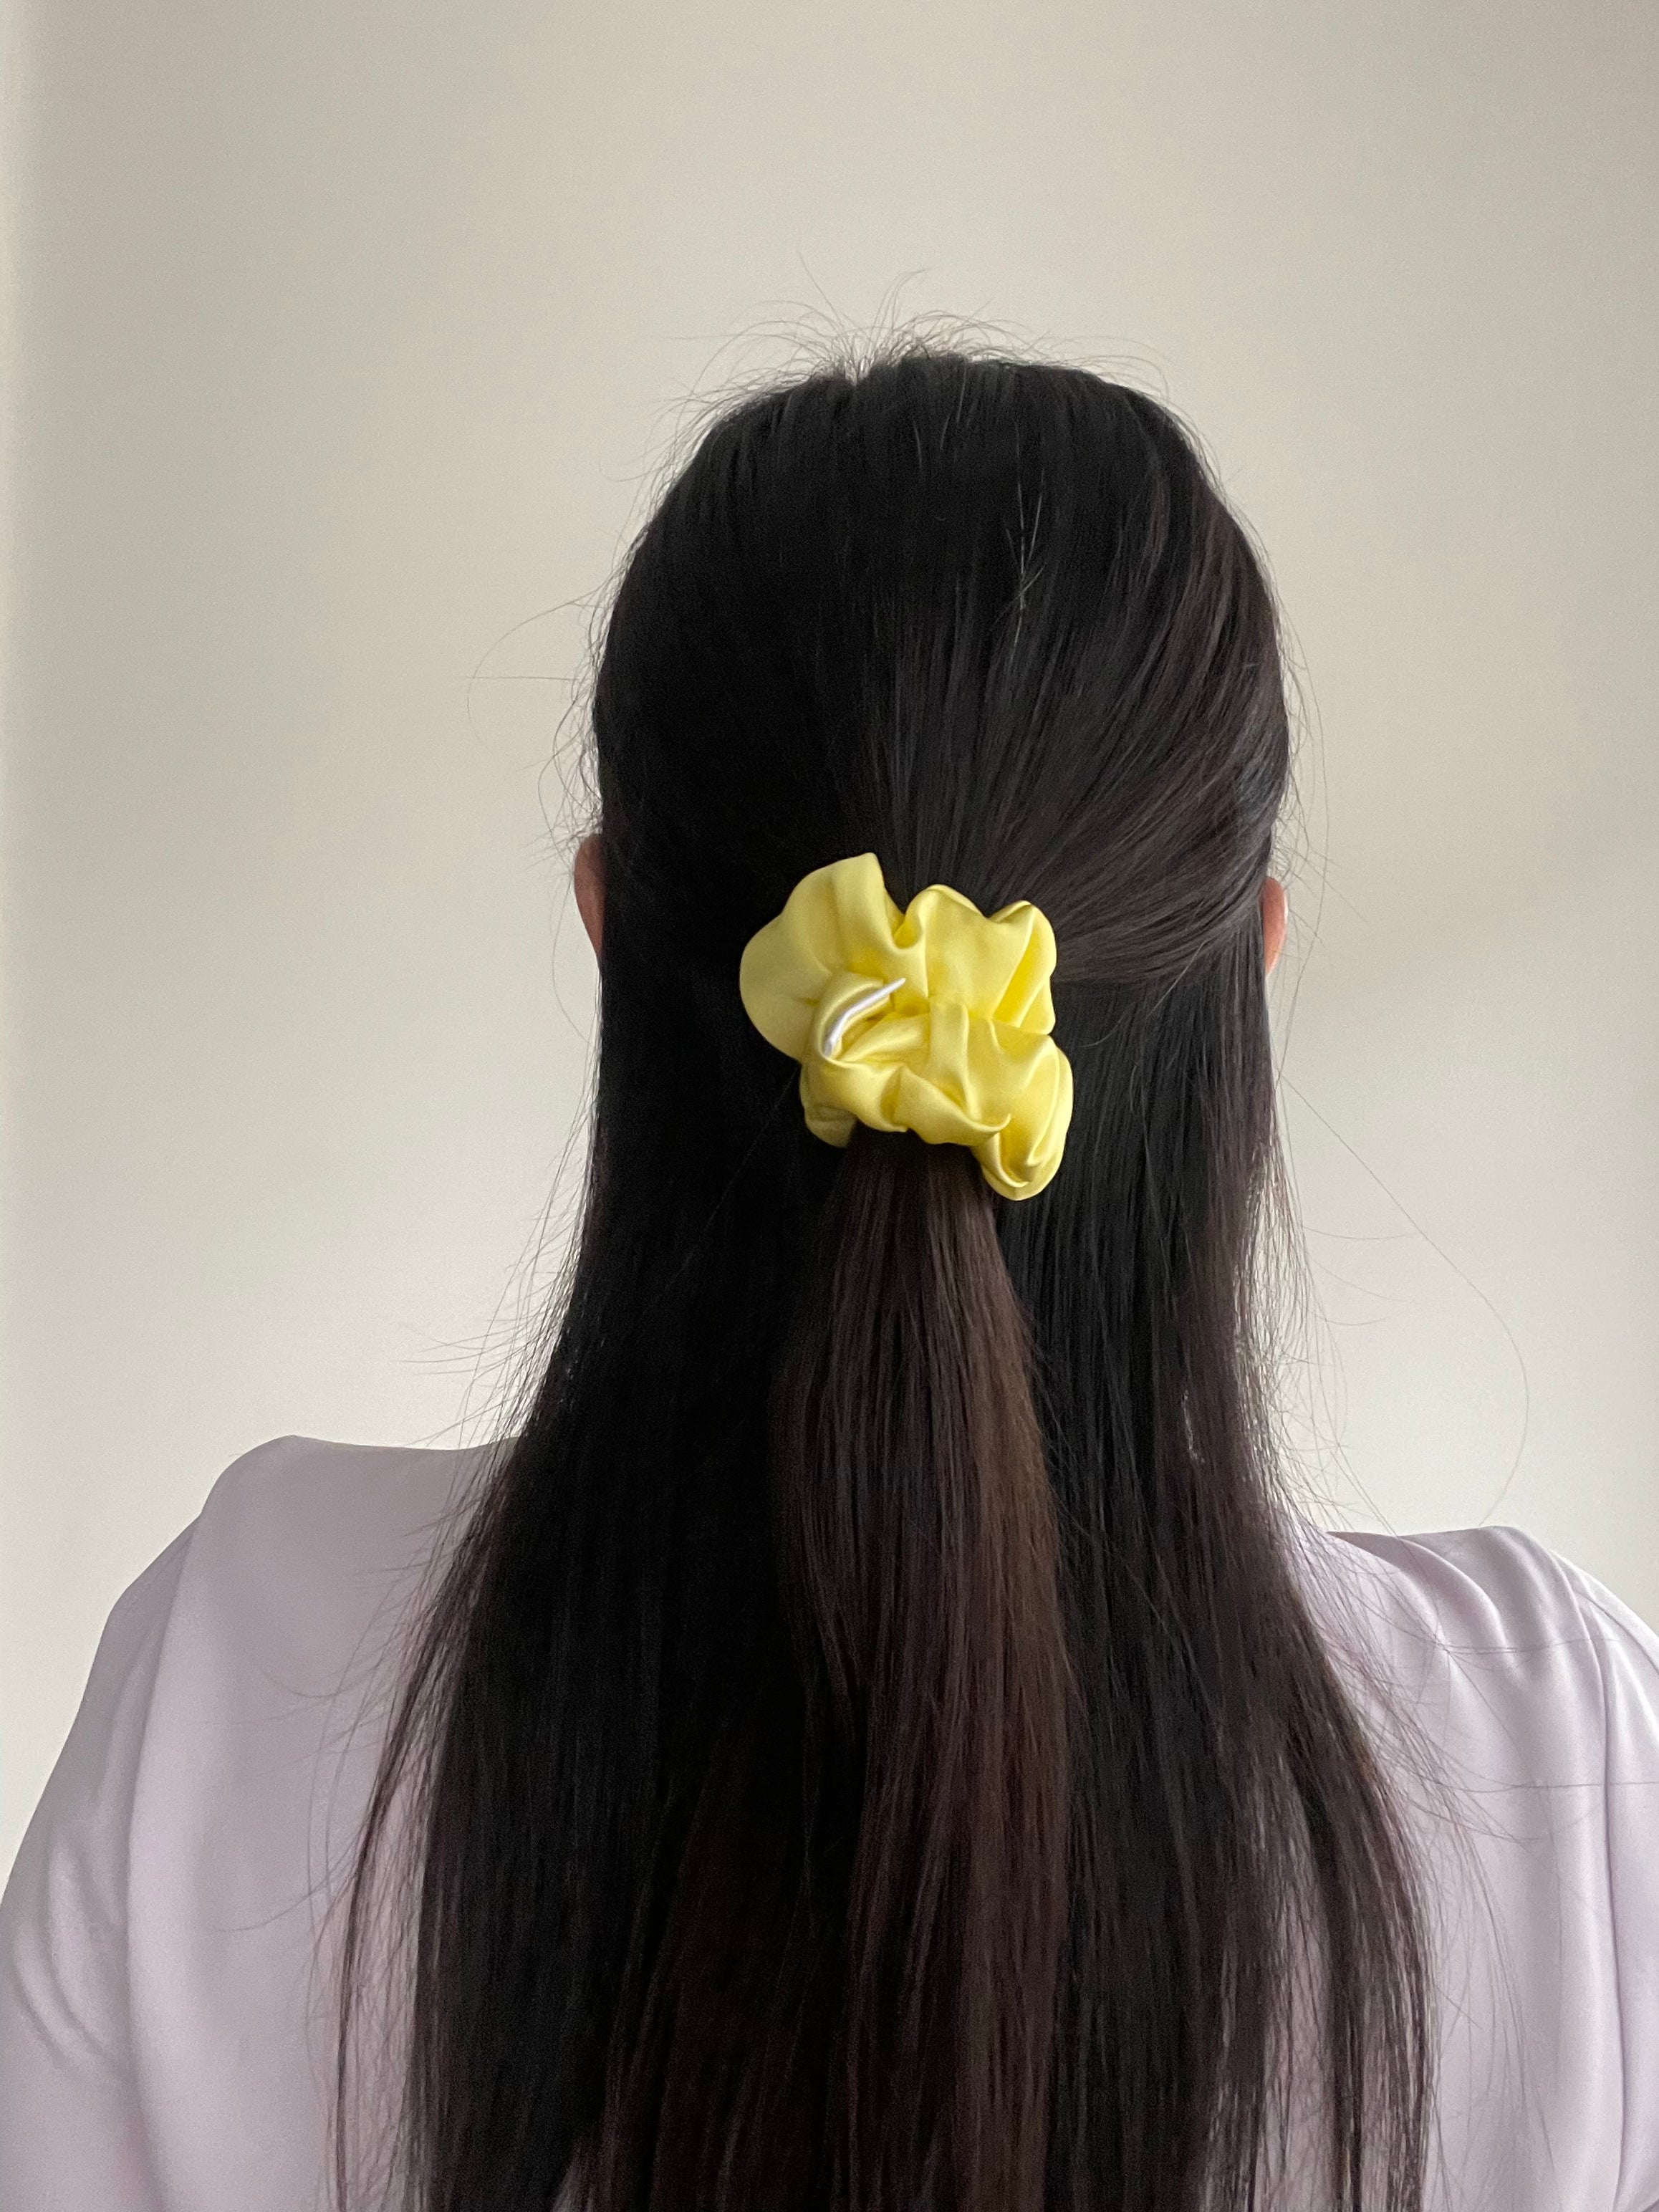 Lemon Silk Scrunchie in Beau size in Woman's half up half down ponytail.